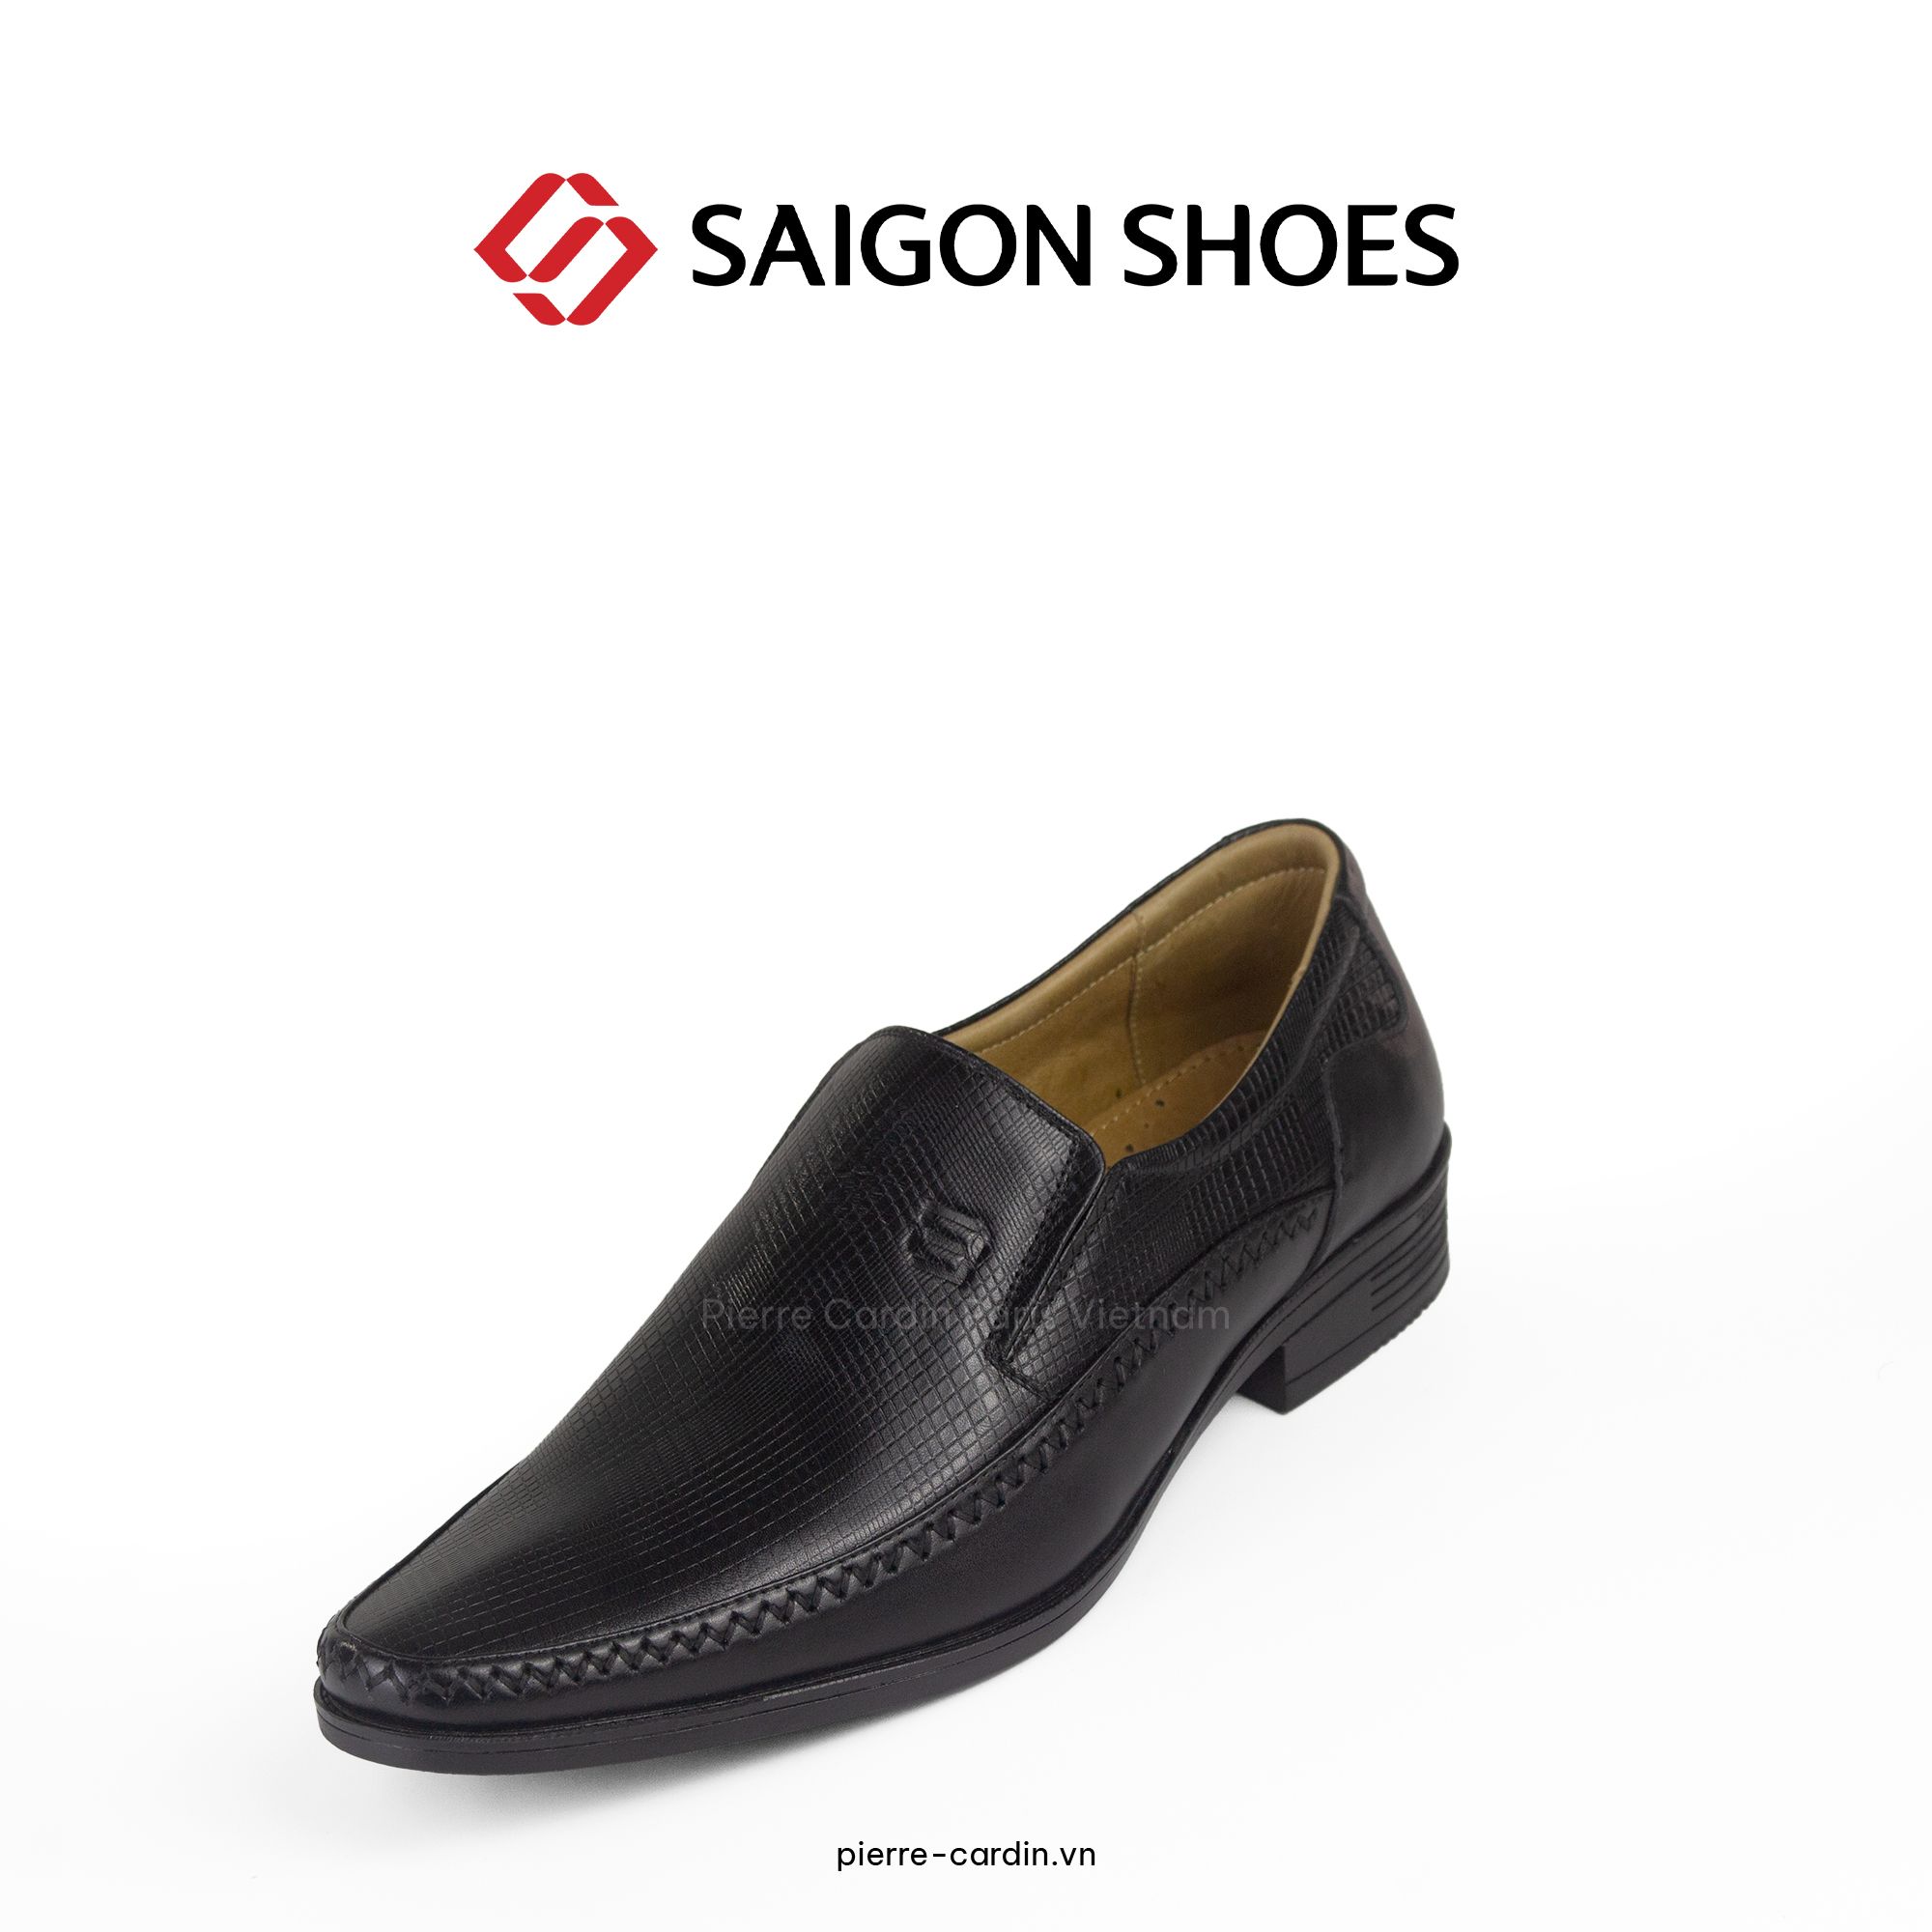 Pierre Cardin Paris Vietnam: Giày Lười Saigon Shoes - SGMFWLH 009